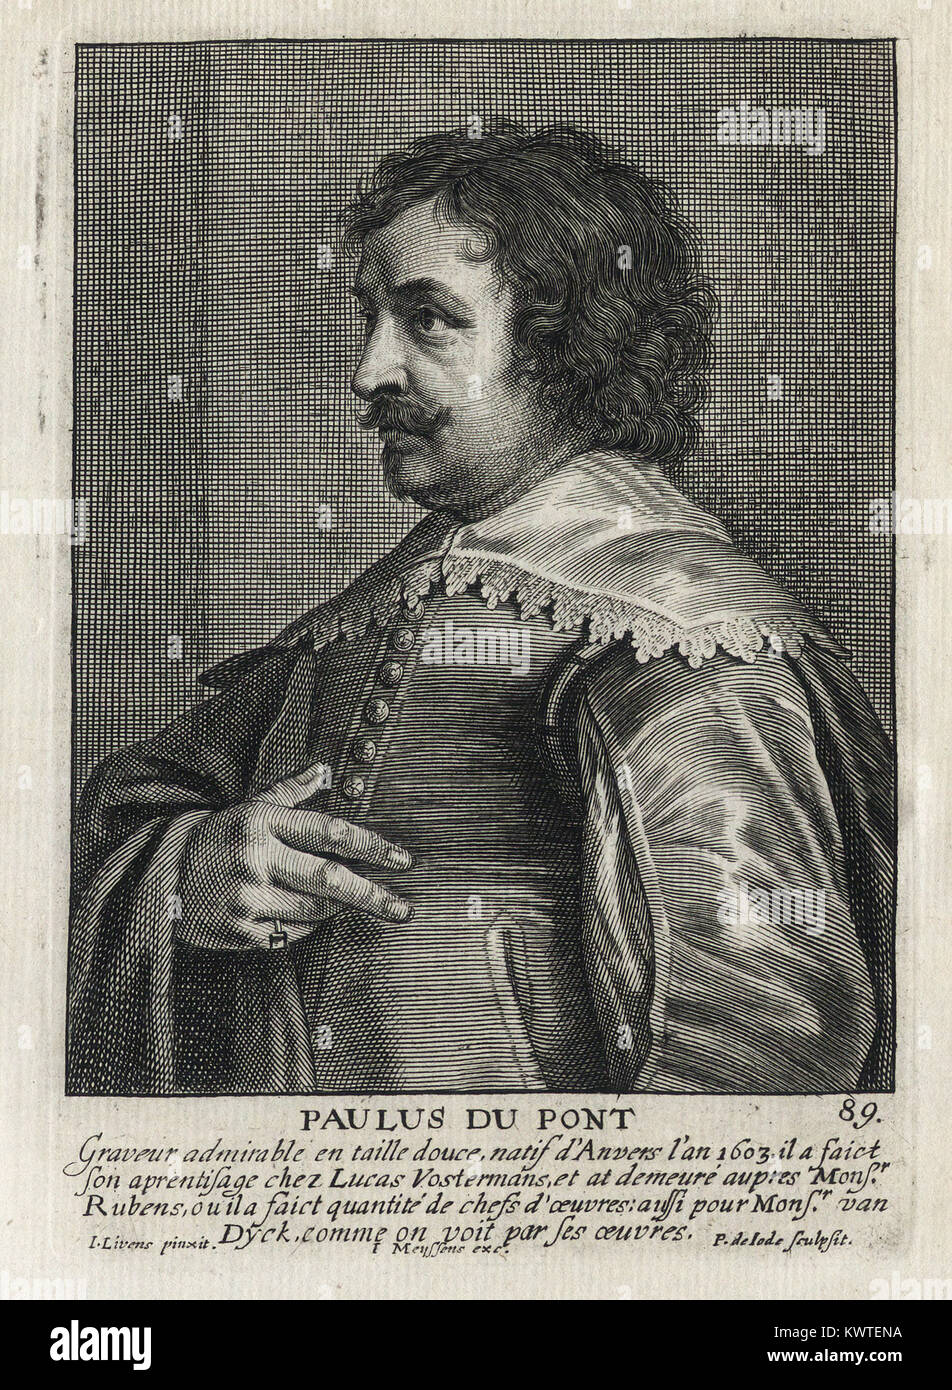 PAULUS DU PONT - Woodcut portrait and short biography (old french language) - Engraving 17th century Stock Photo